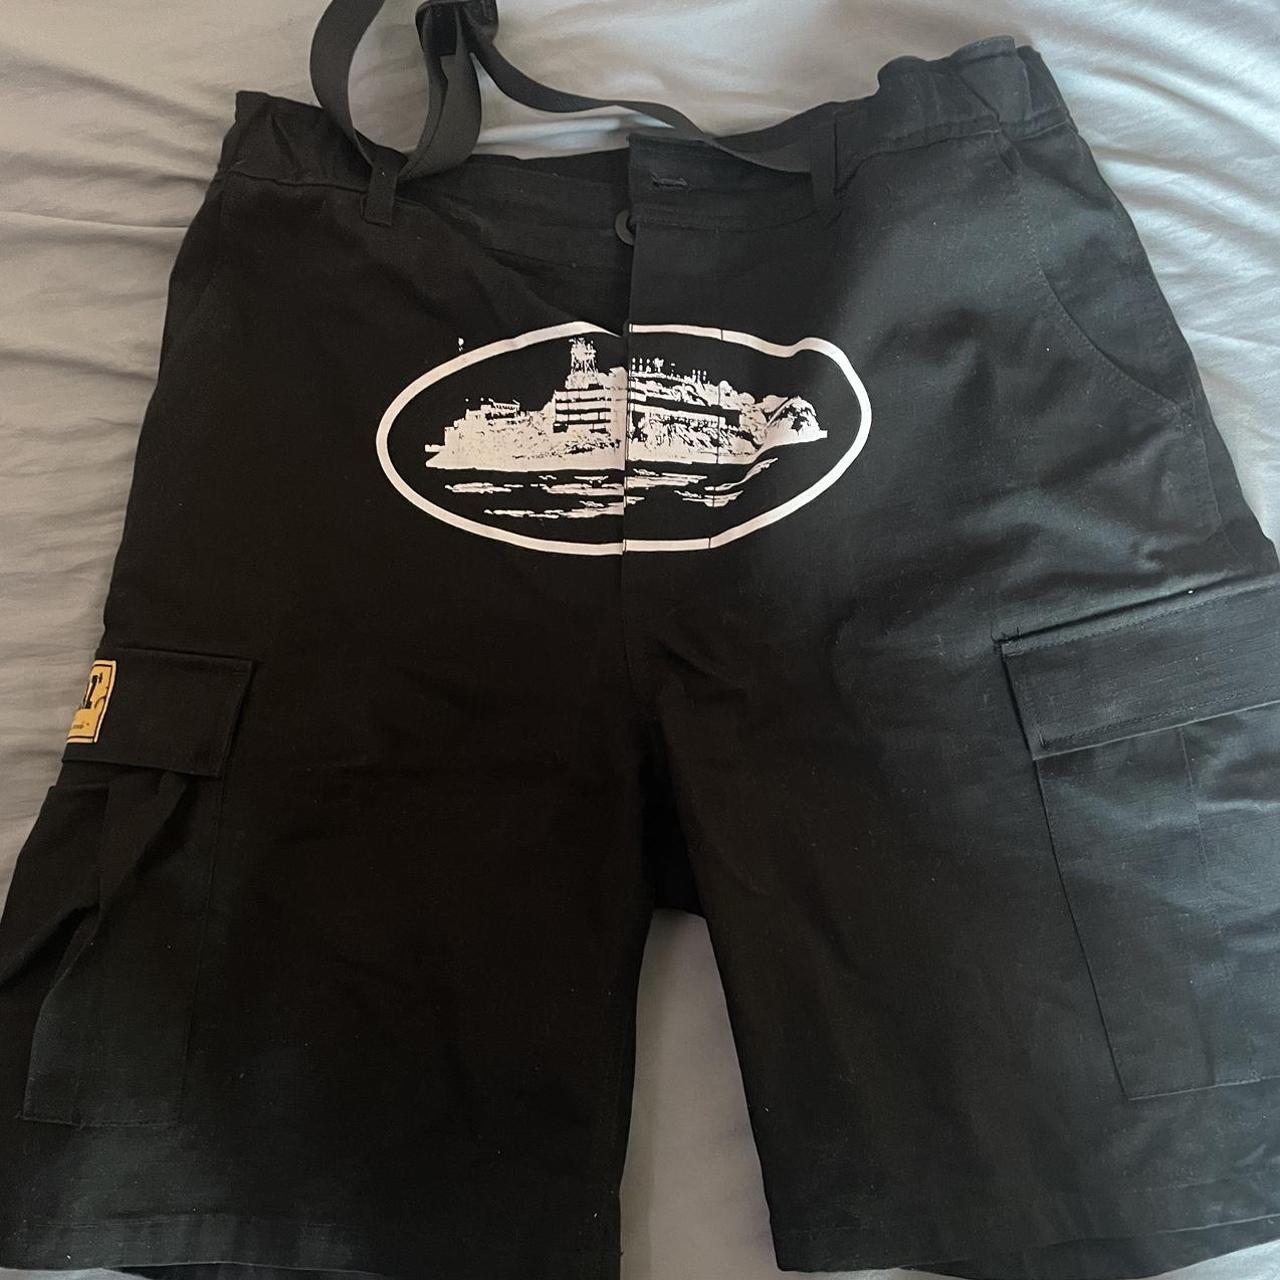 Corteiz(crtz) OG Black cargo shorts Alcatraz...